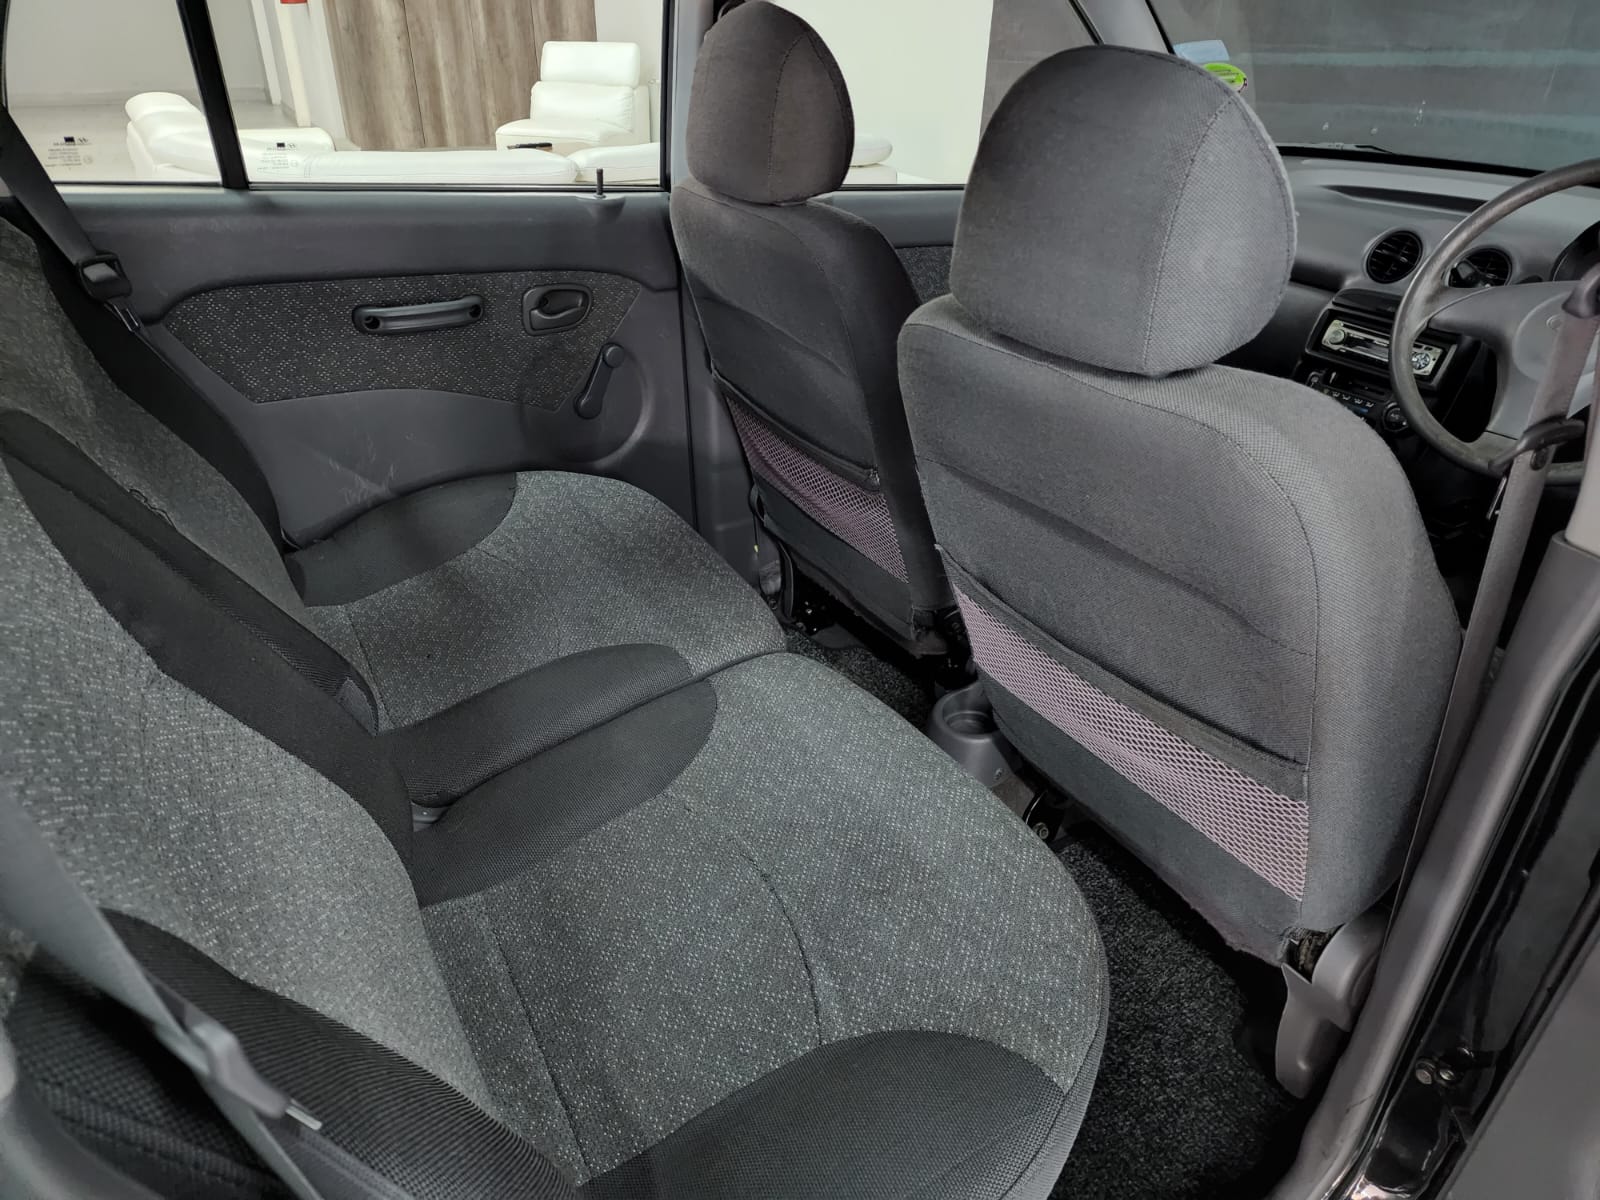 Hyundai Atos interior - Seats